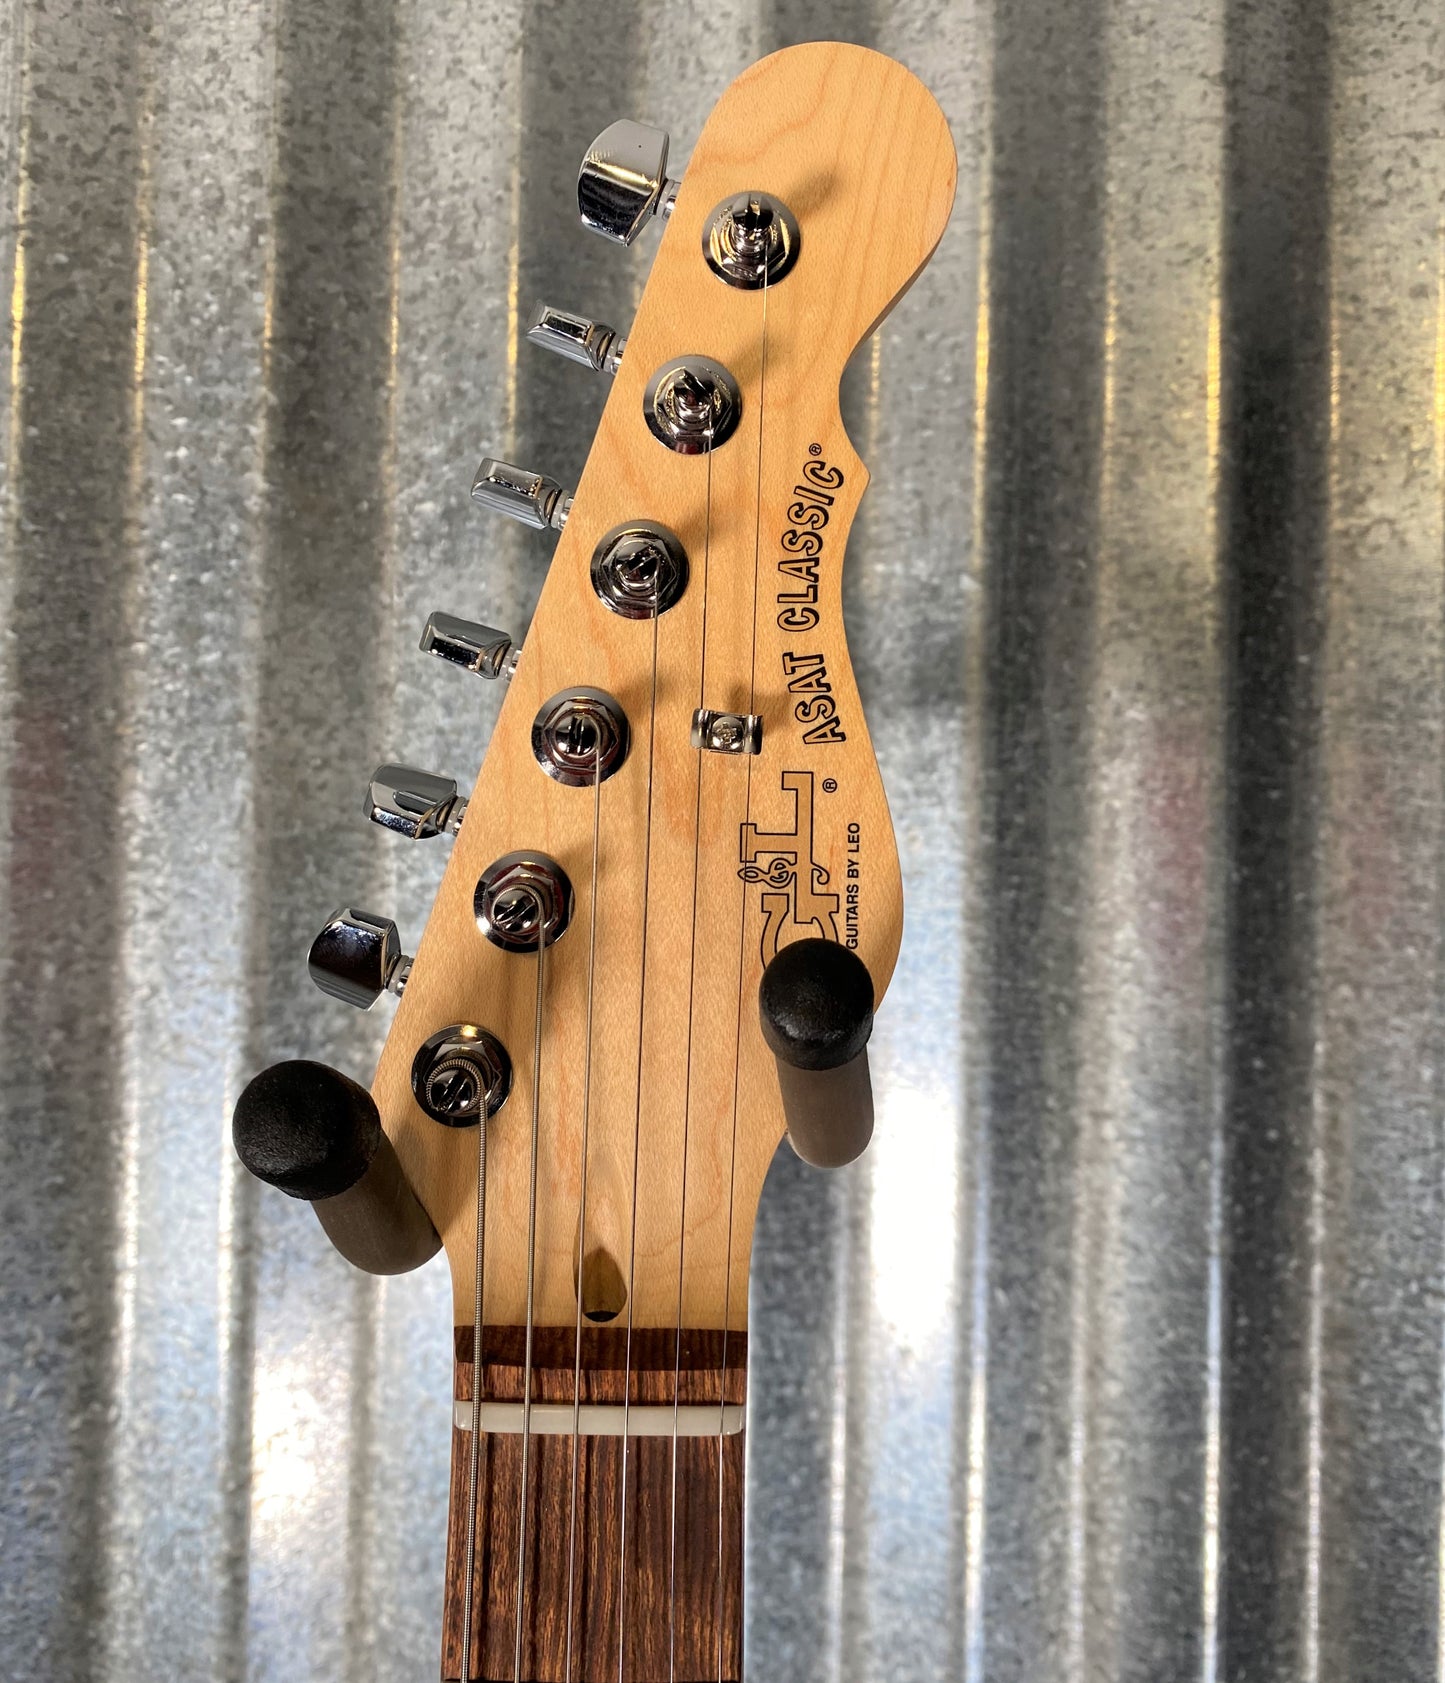 G&L USA Limited Edition ASAT Classic Thinline Semi Hollow Autumn Burst Guitar & Bag #4173